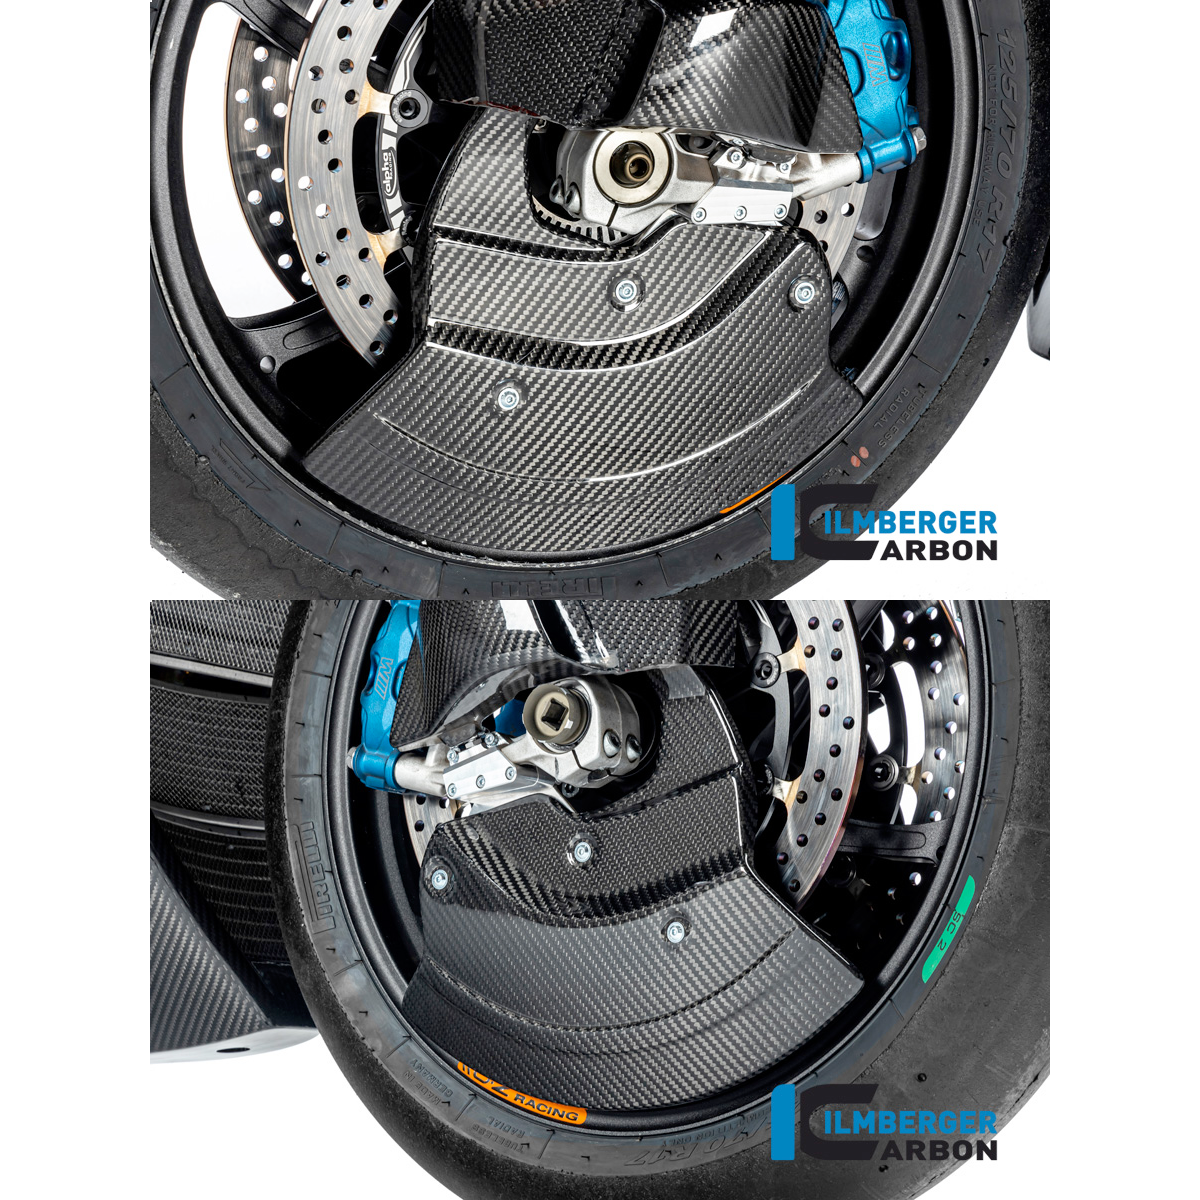 Carbon Fiber Wheel Cover Kit by Ilmberger Carbon (WCK.001.M123S.K)